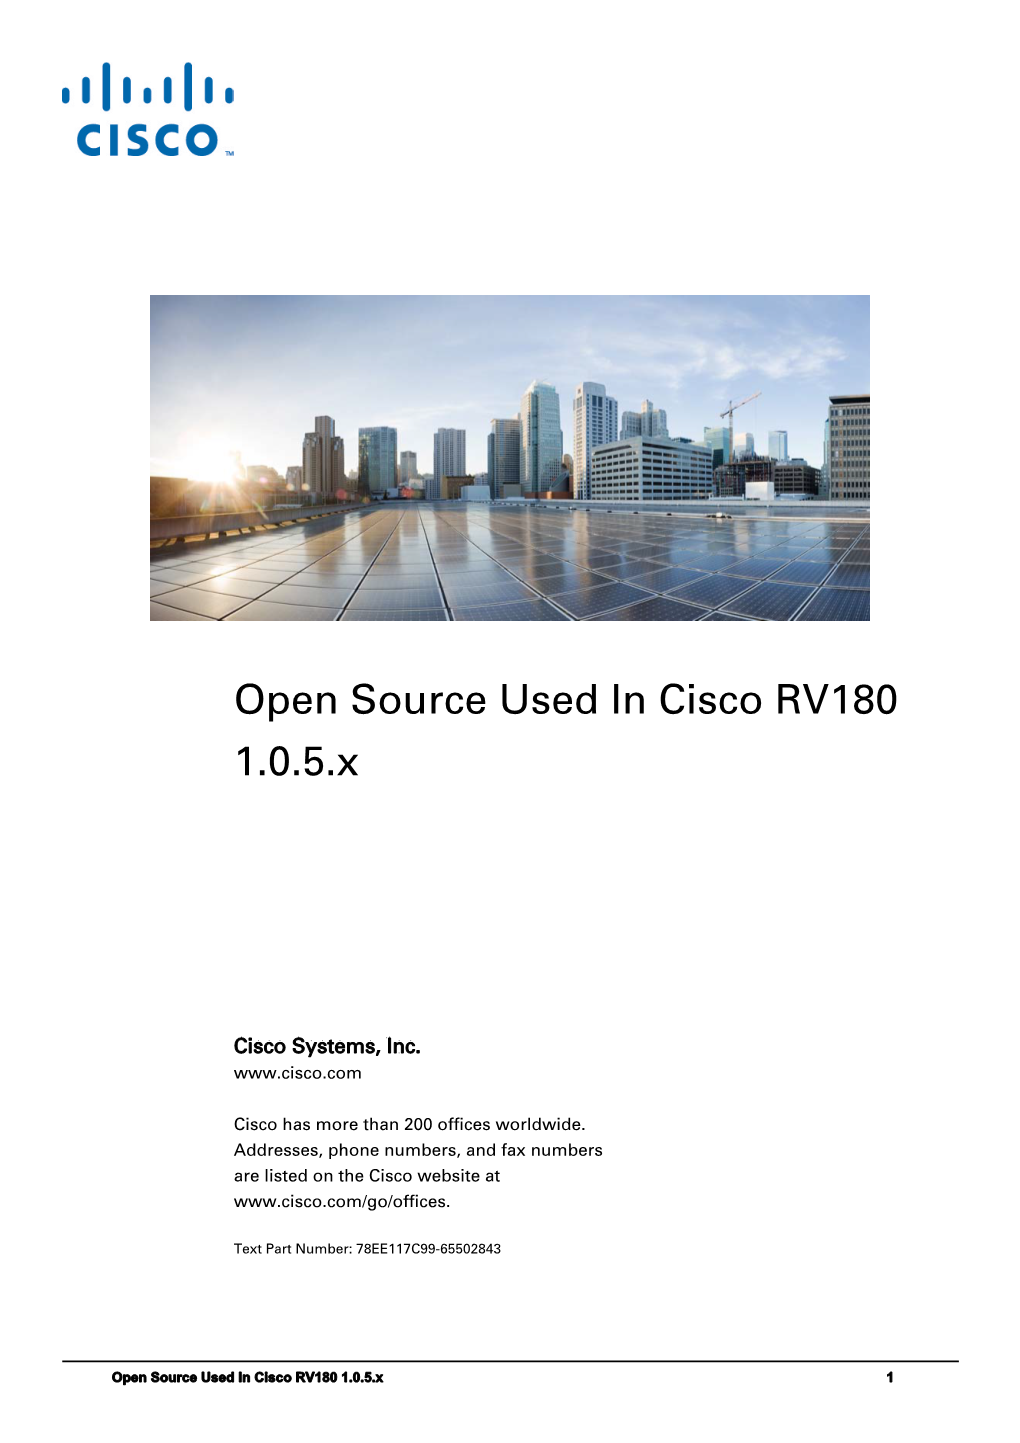 Open Source Used in Cisco RV180 Firmware Version 1.0.5.X